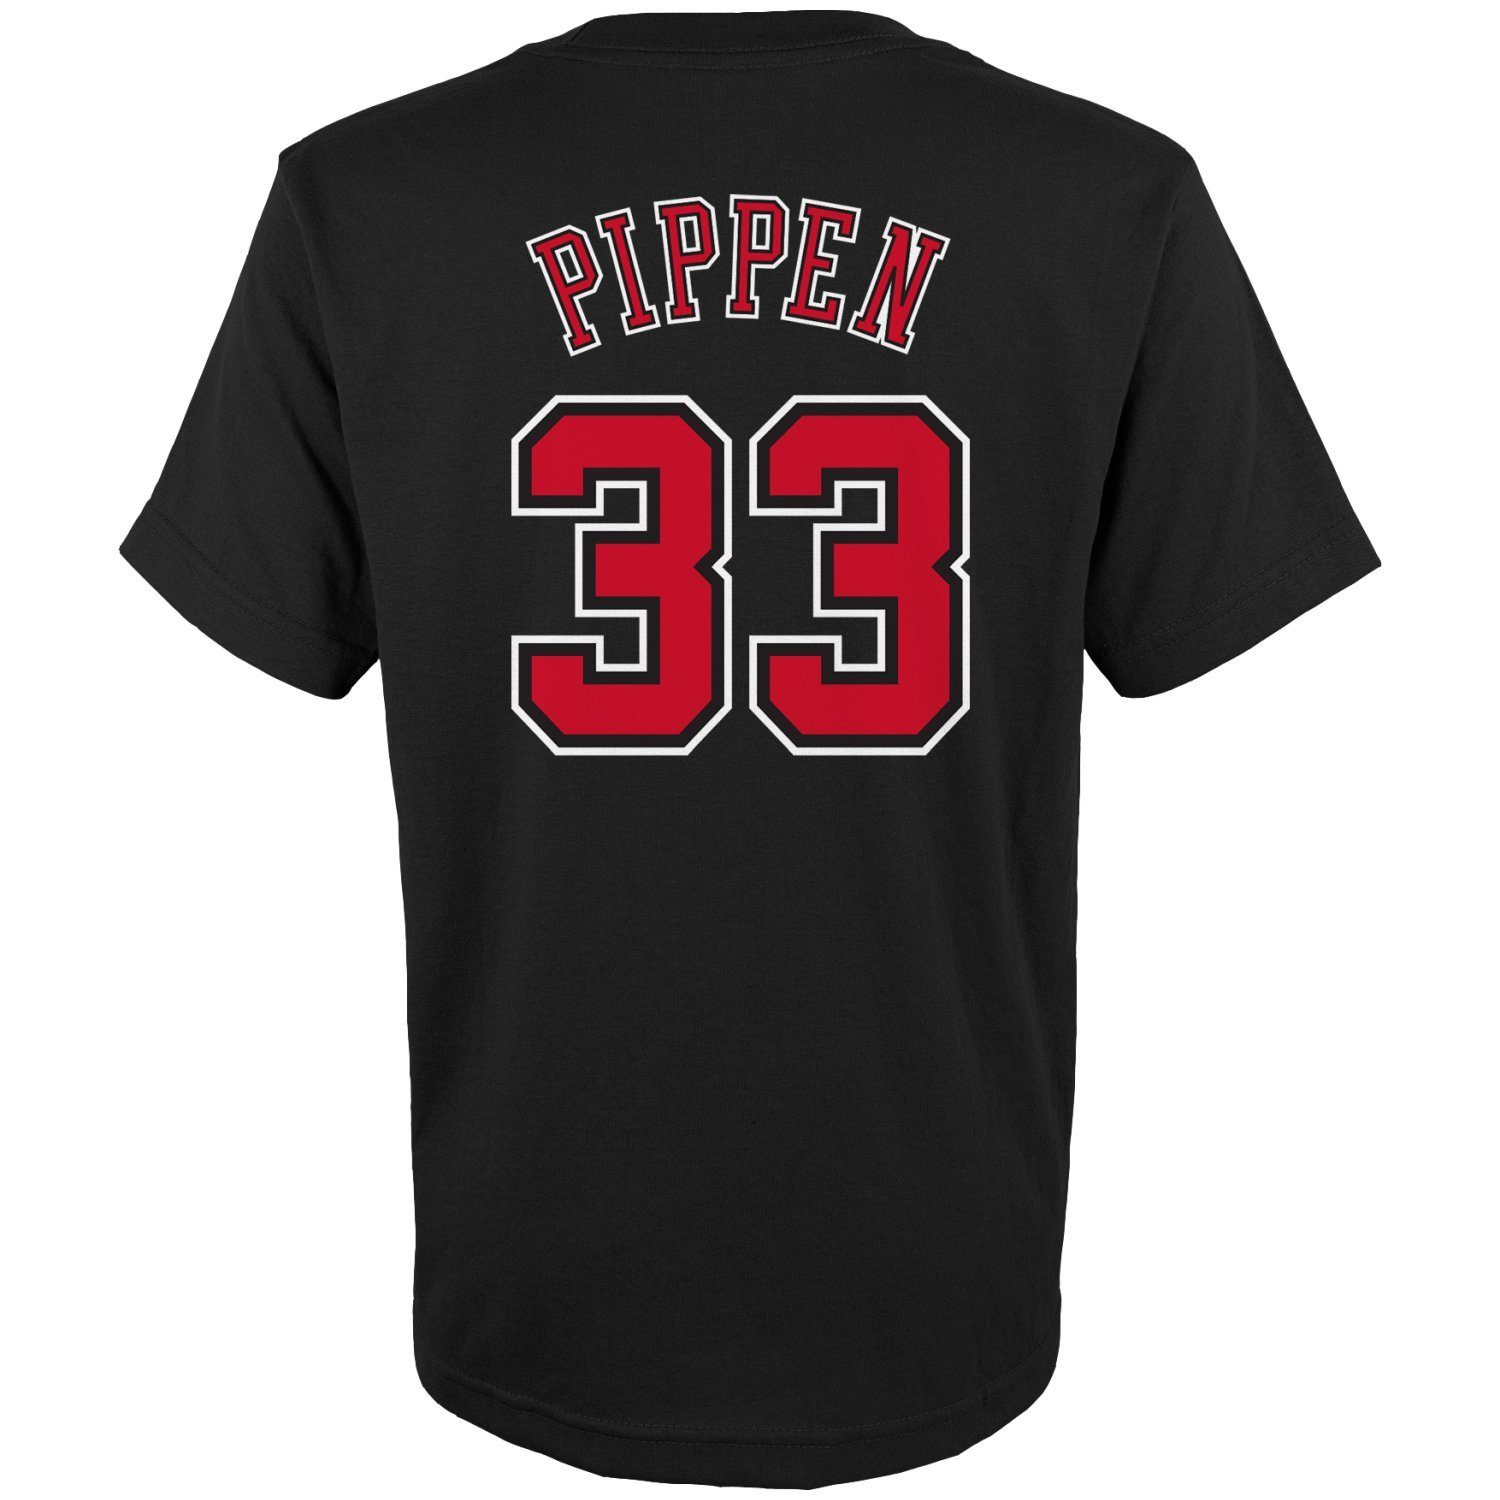 Print-Shirt / / Black Pippen Chicago Bulls Bulls Ness Scottie Red Chicago Mitchell &